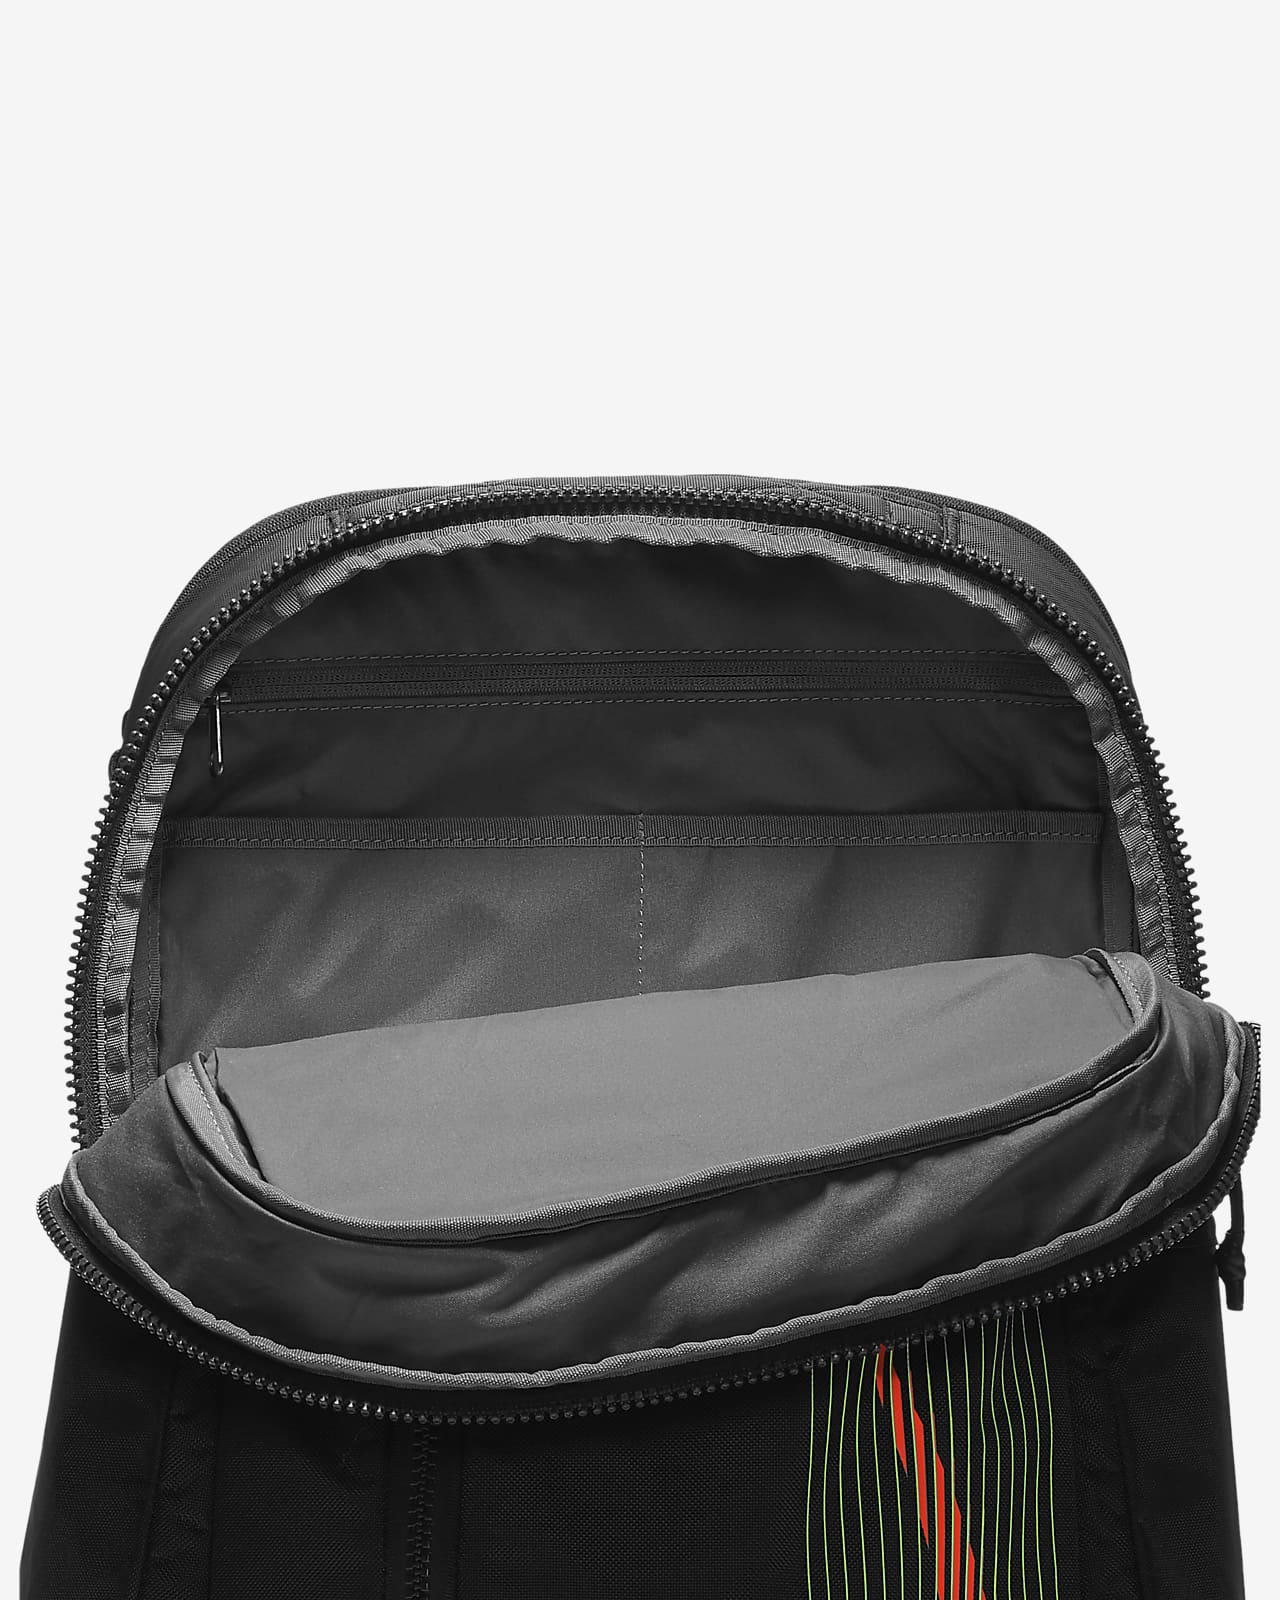 nike vapor power 2. backpack review